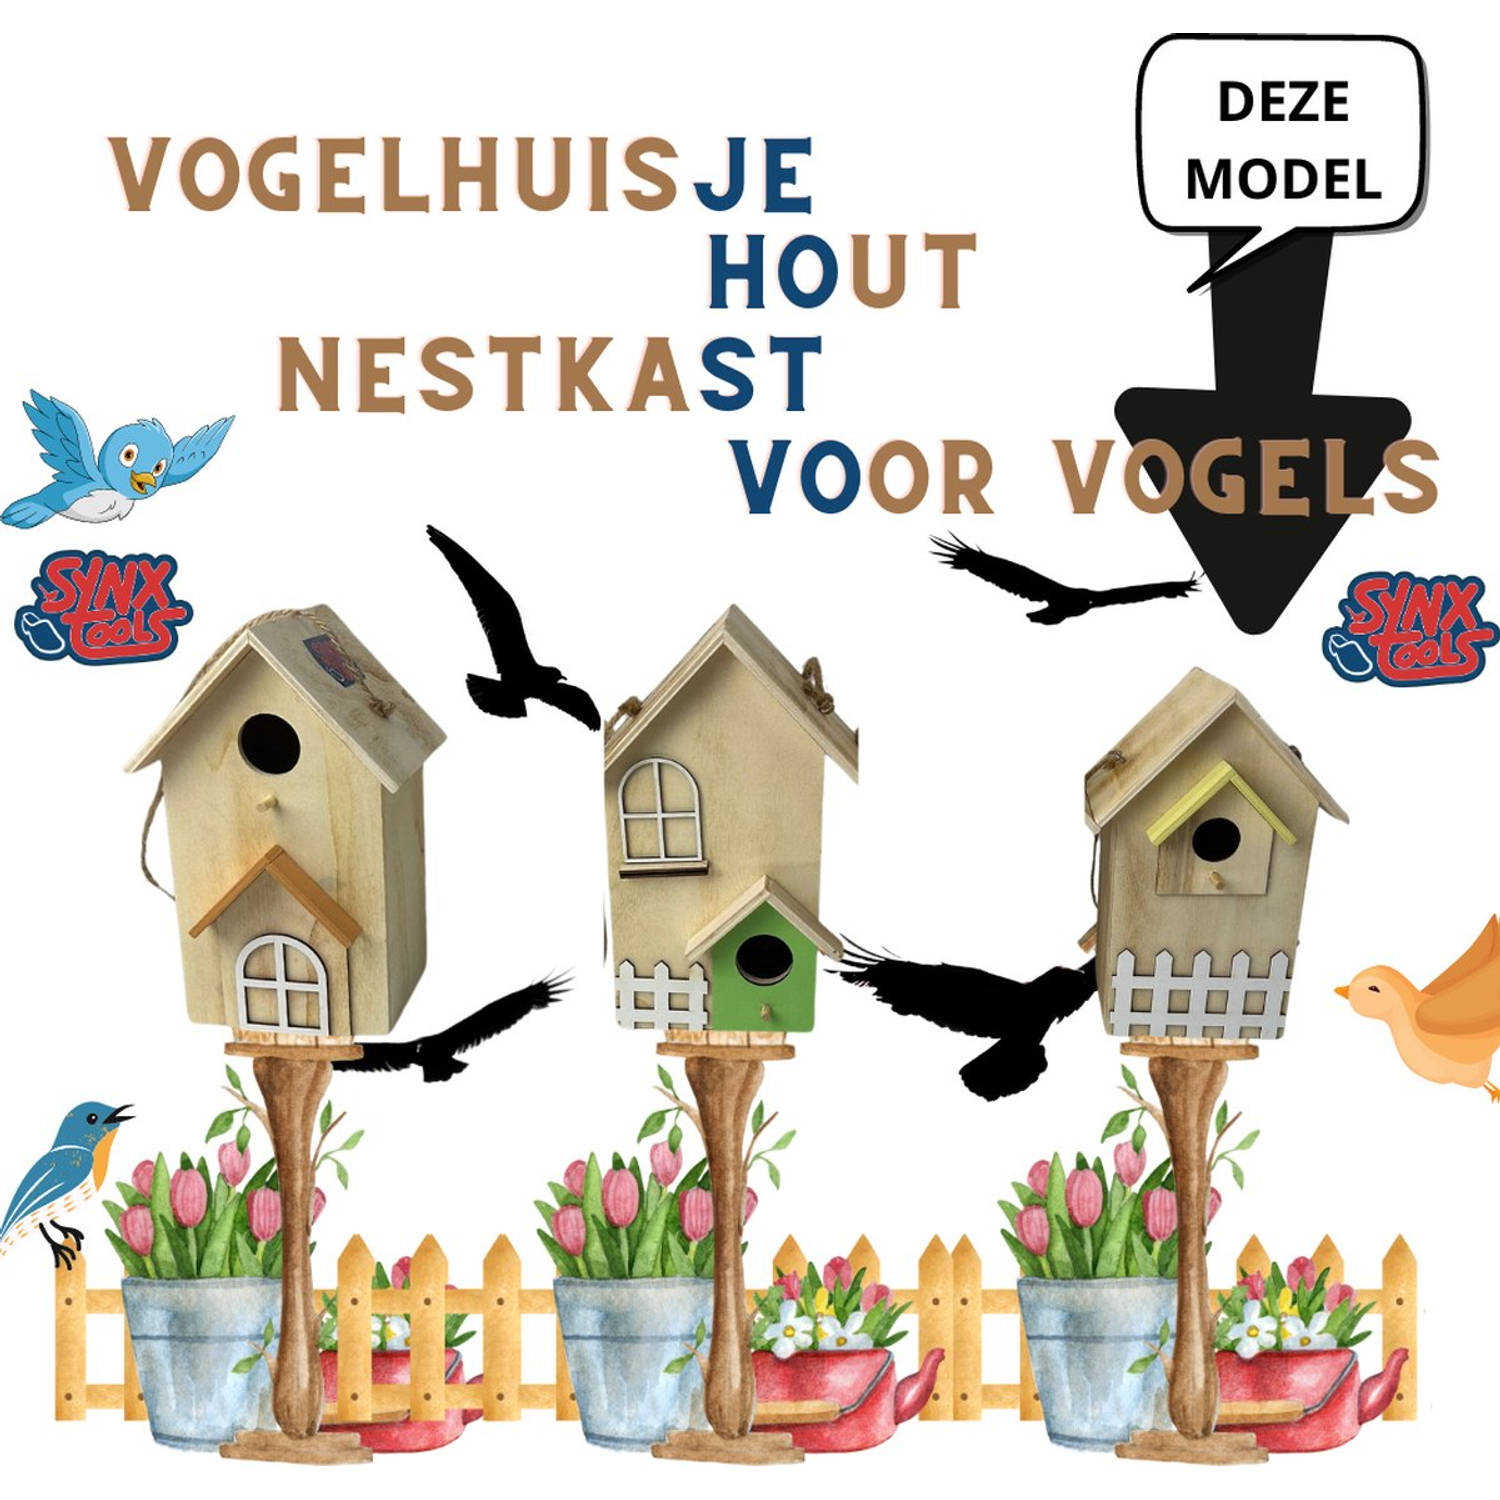 Synx Tools Vogelvoederhuisje Hout Vogelhuisje - Nestkastpakket - Vogelhuisje - Vogelartikelen - Vogels - Vogels accessoires - Vogelhuis